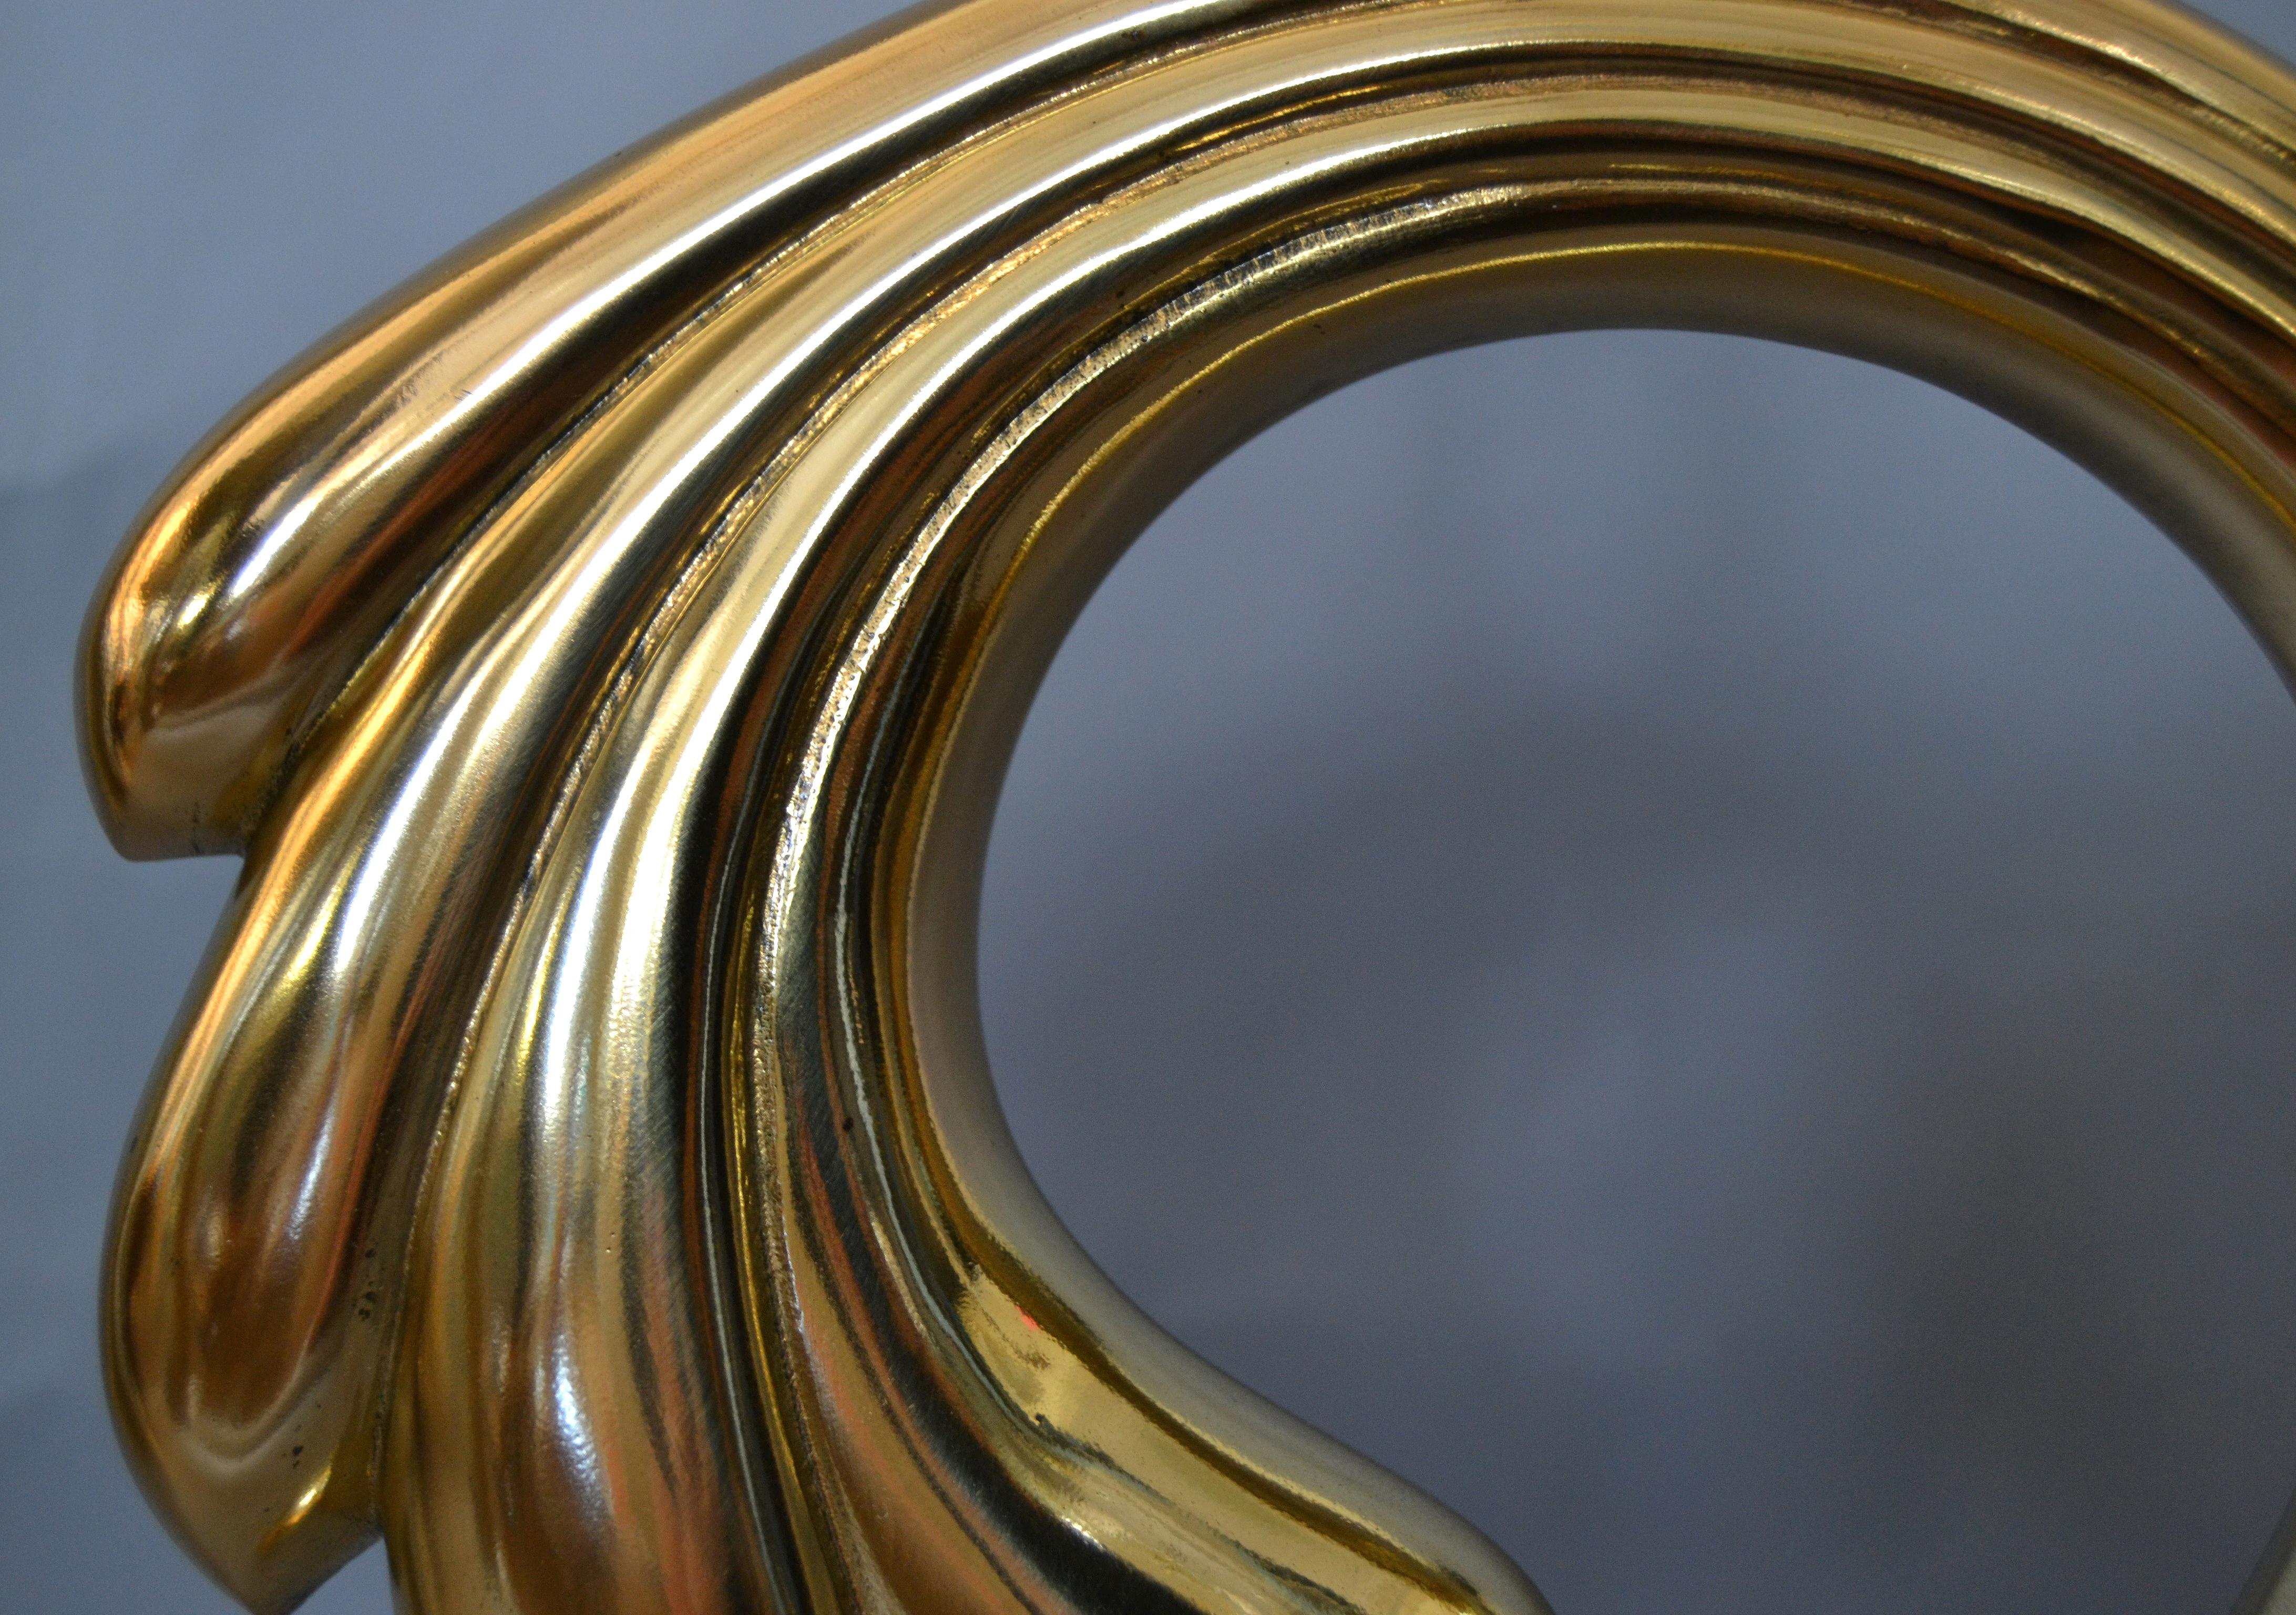 Pierre Cardin Manner Sculptural Brass Table Lamp Mid-Century Modern For Sale 1